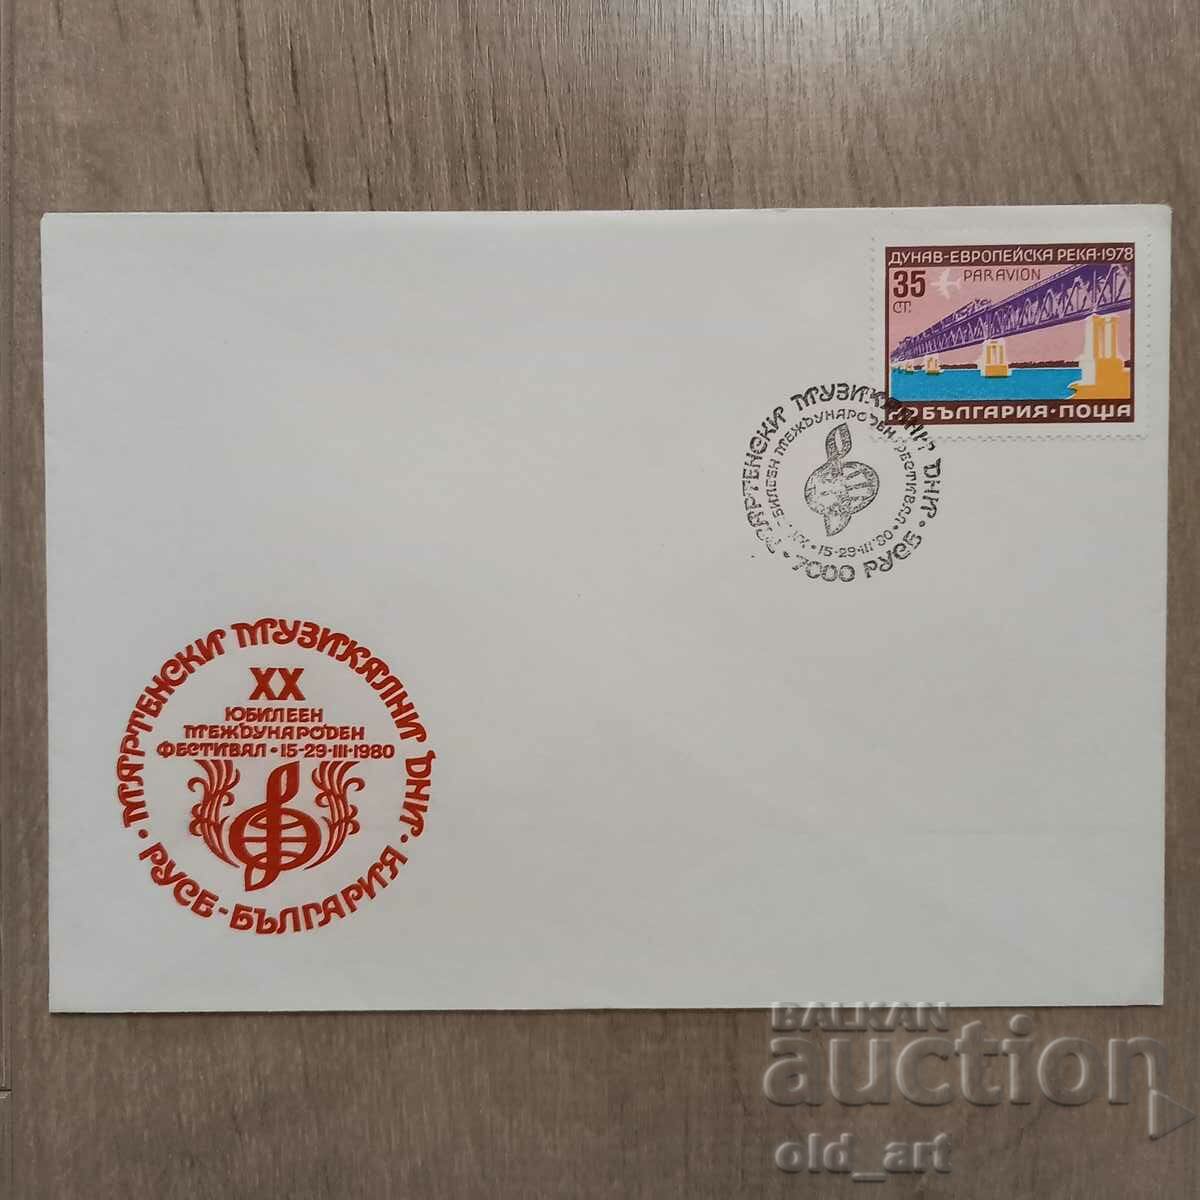 Postal envelope - XX anniversary. March Music Days festival